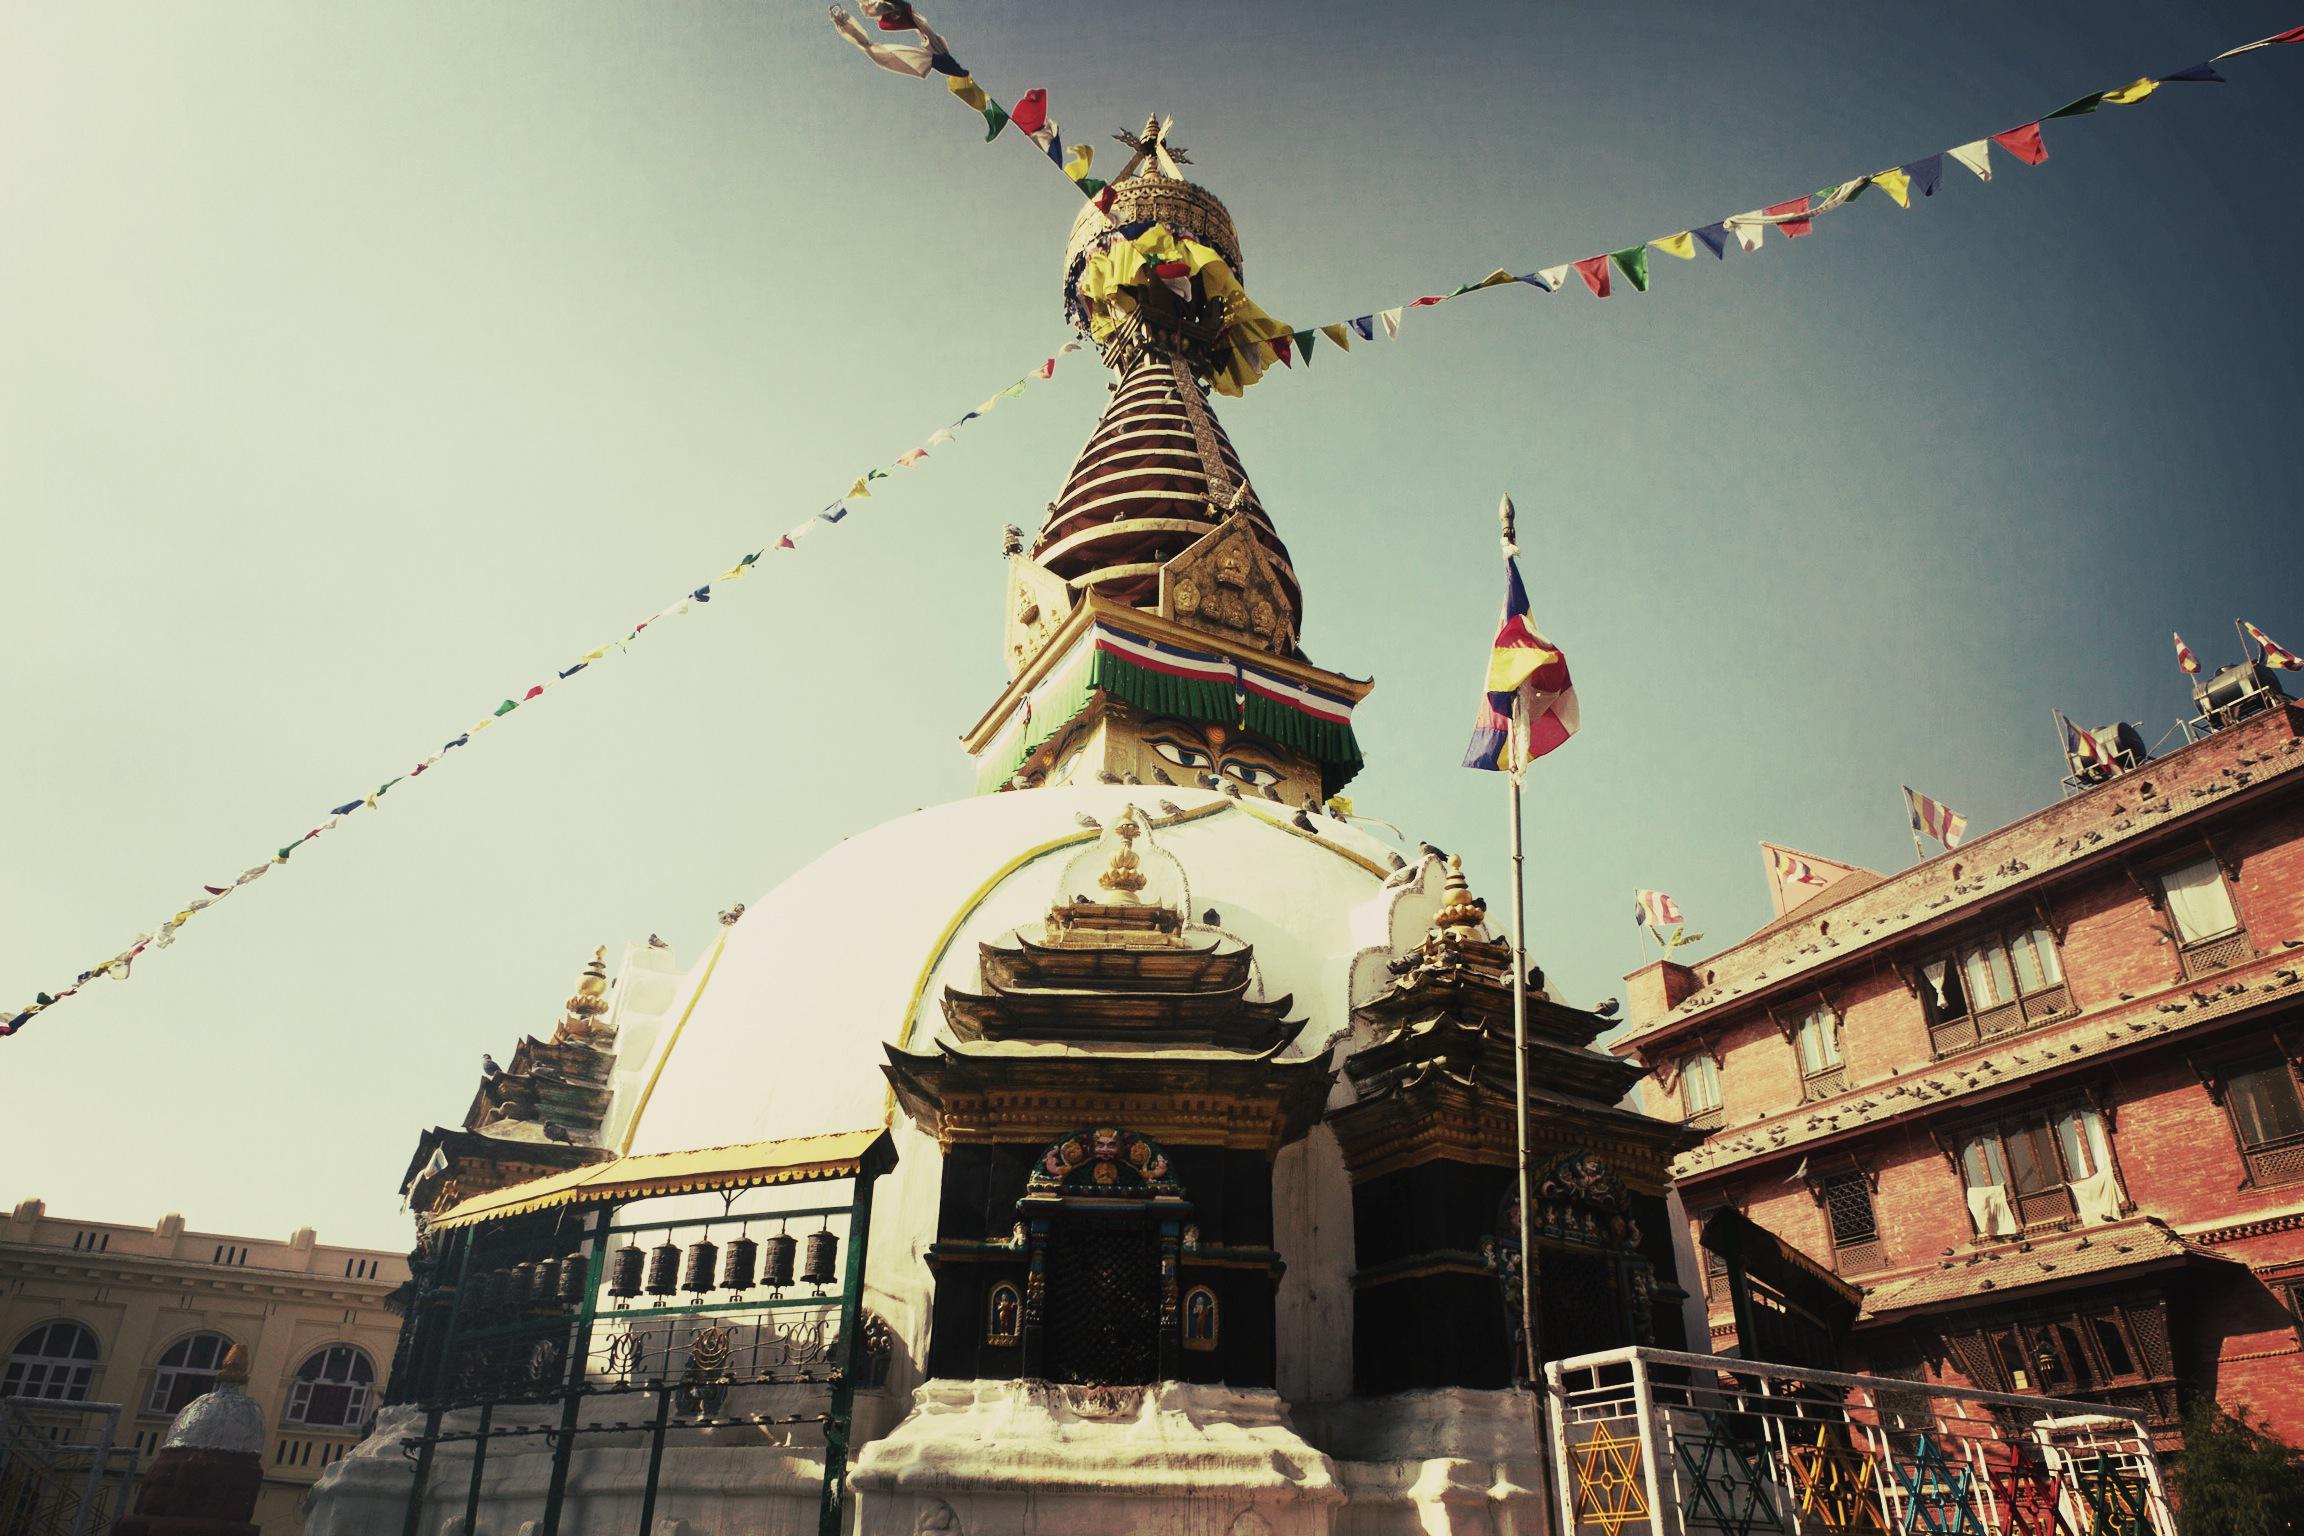 Gallery Nepal - Image 1